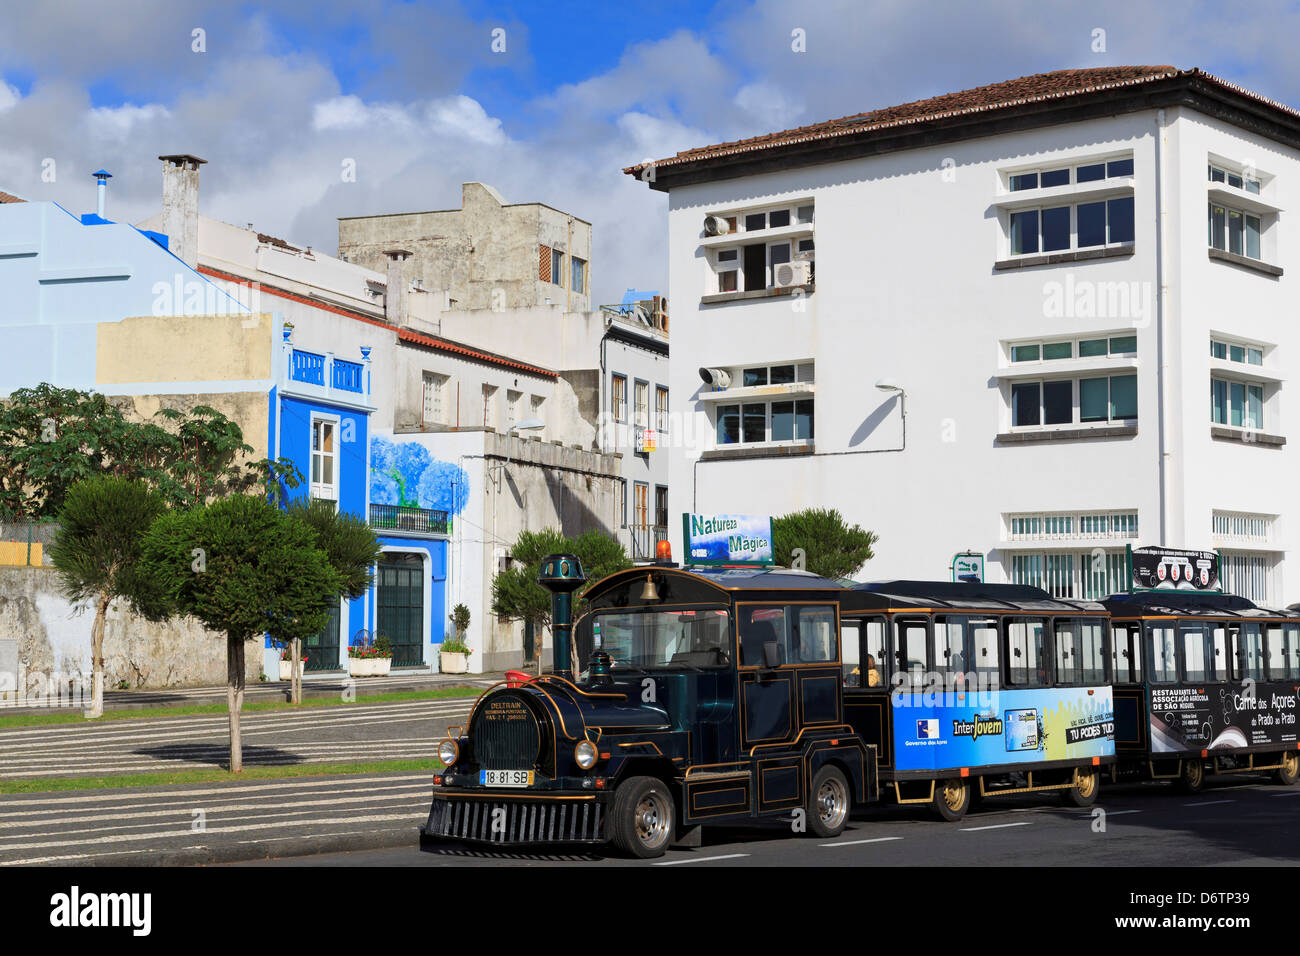 Tourist train on Avenida Infante D. Henrique,Ponta Delgada City,Sao Miguel Island,Azores, Portugal,Europe Stock Photo